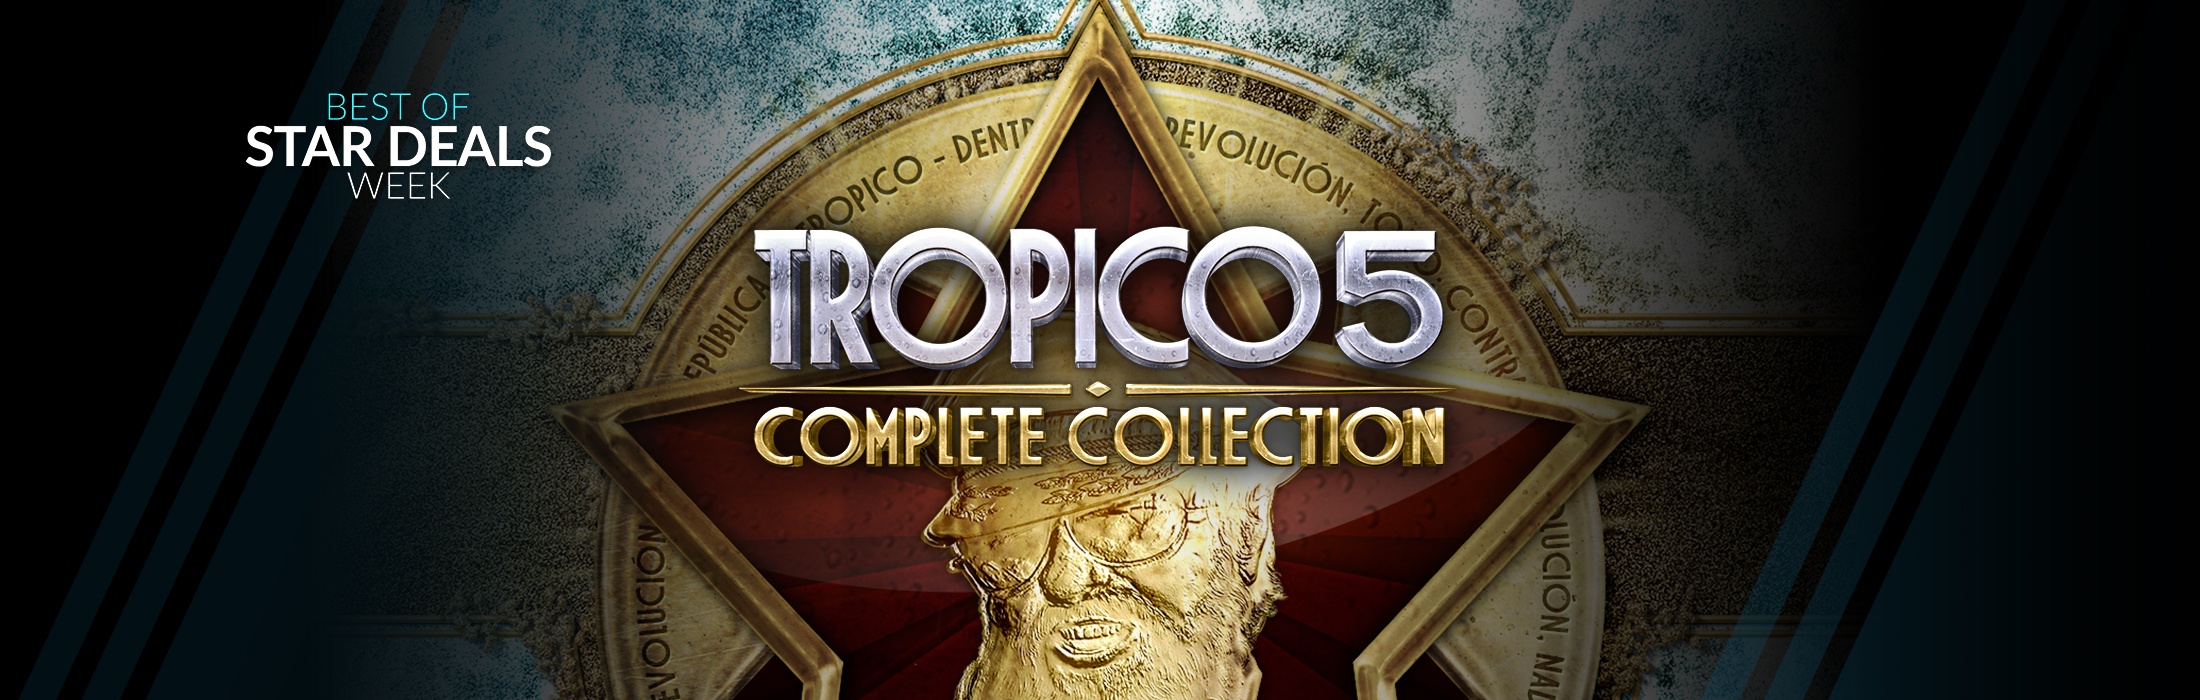 Tropico 5 complete collection [Mínimo]